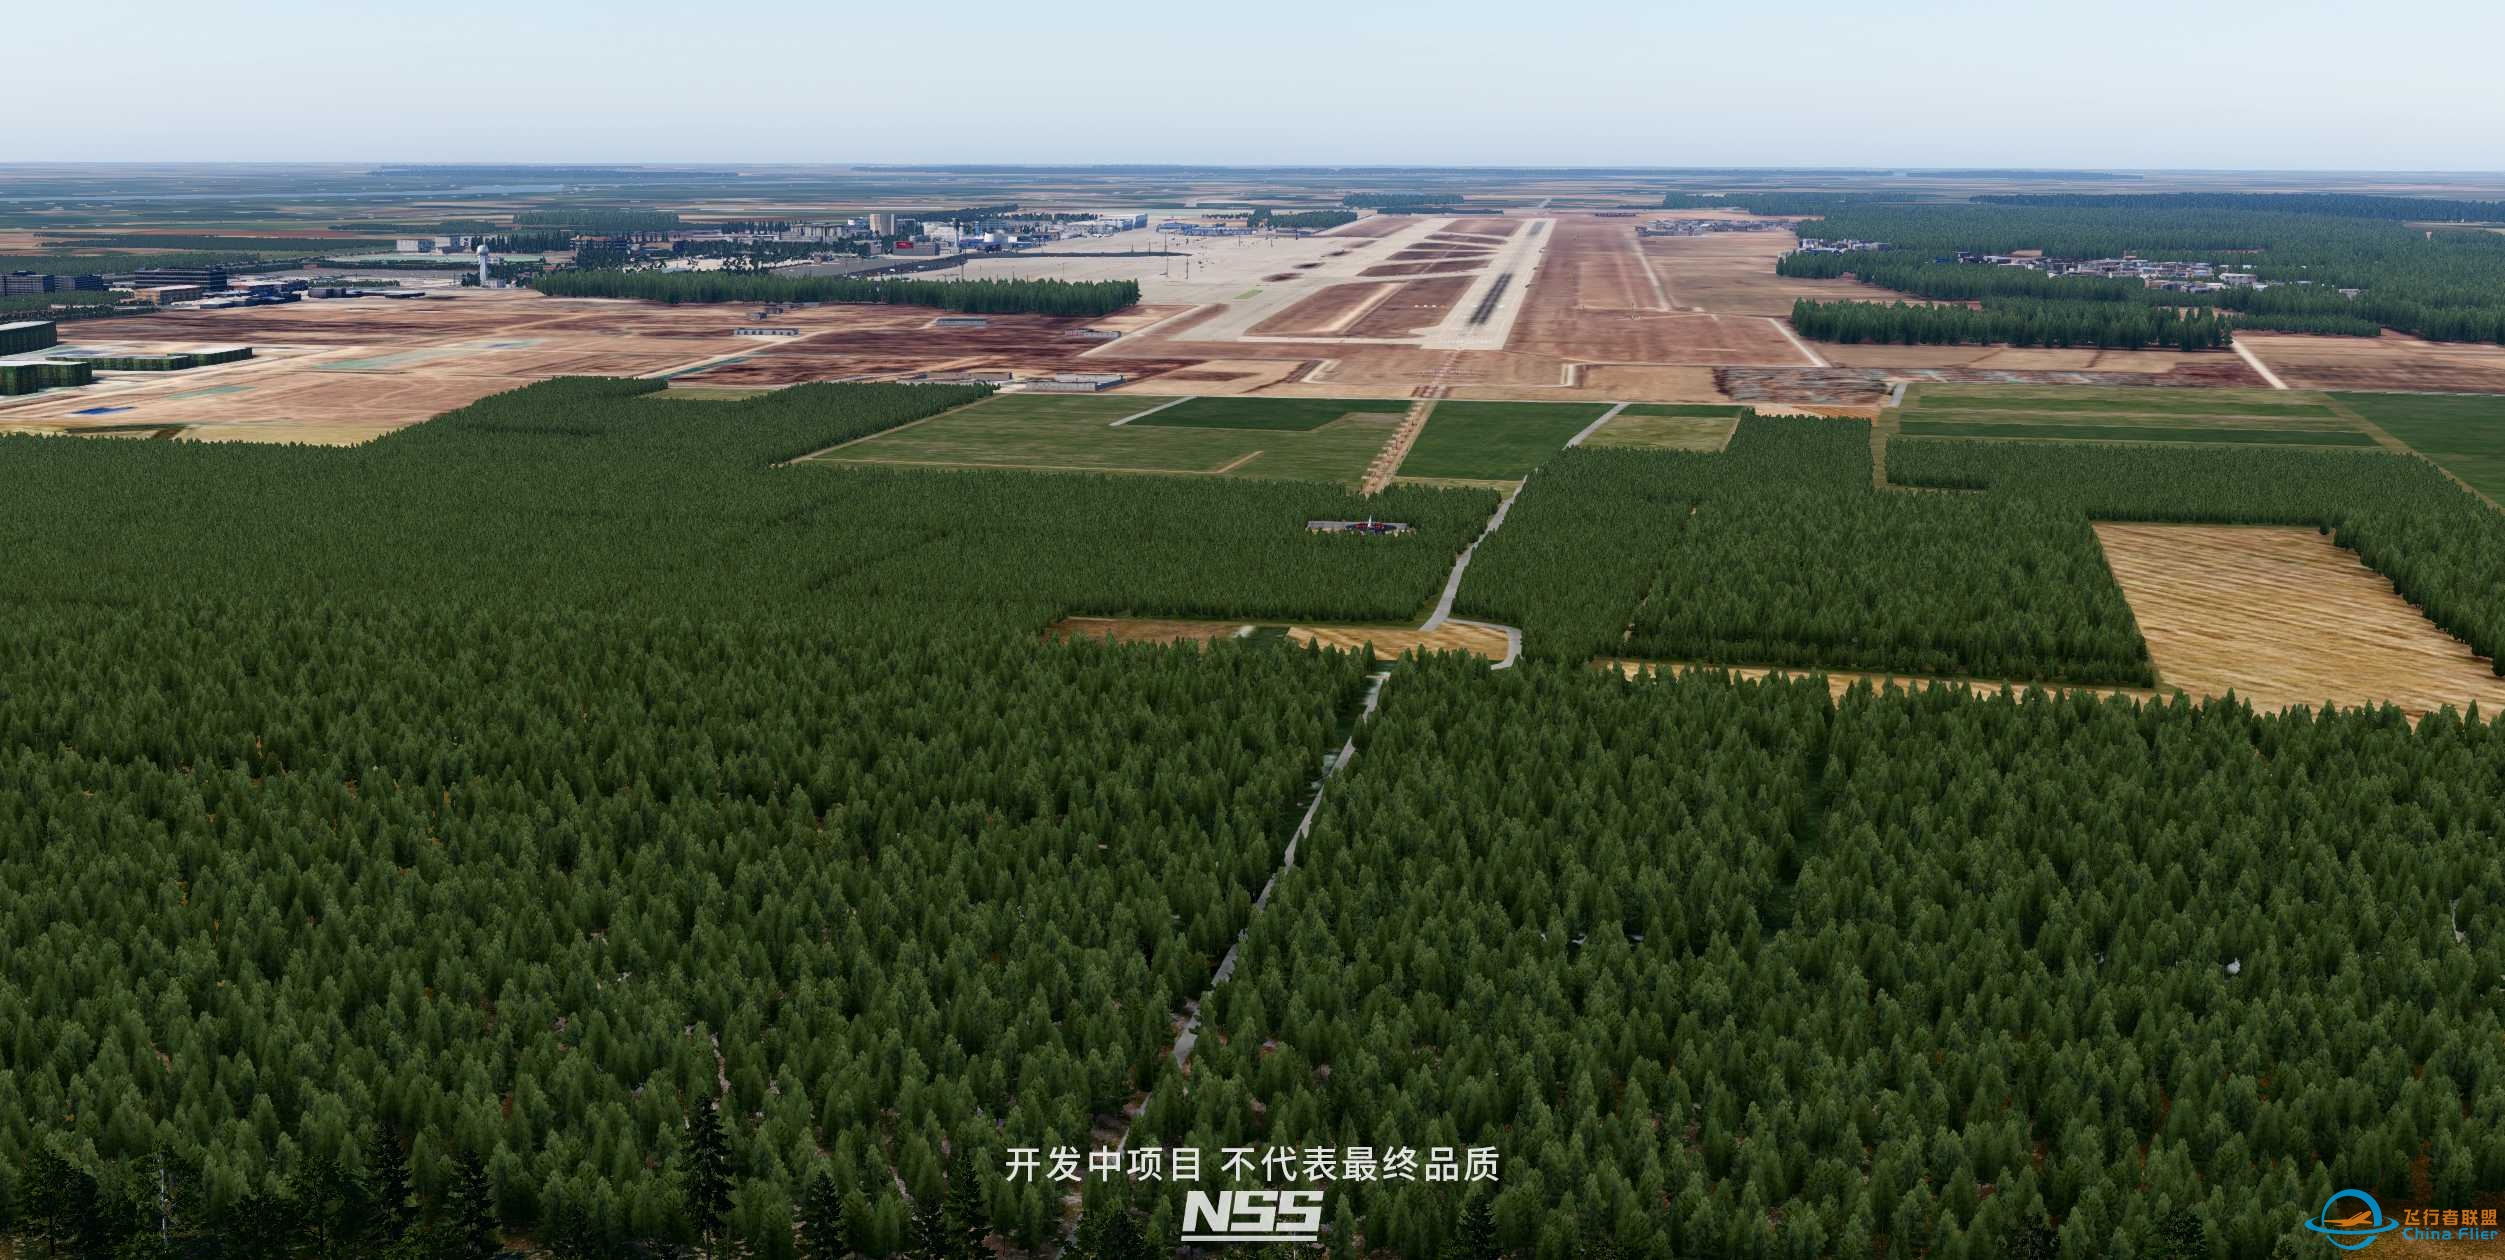 NSS地景开发组 ZSJN 济南遥墙国际机场项目预览 兼公布-8903 